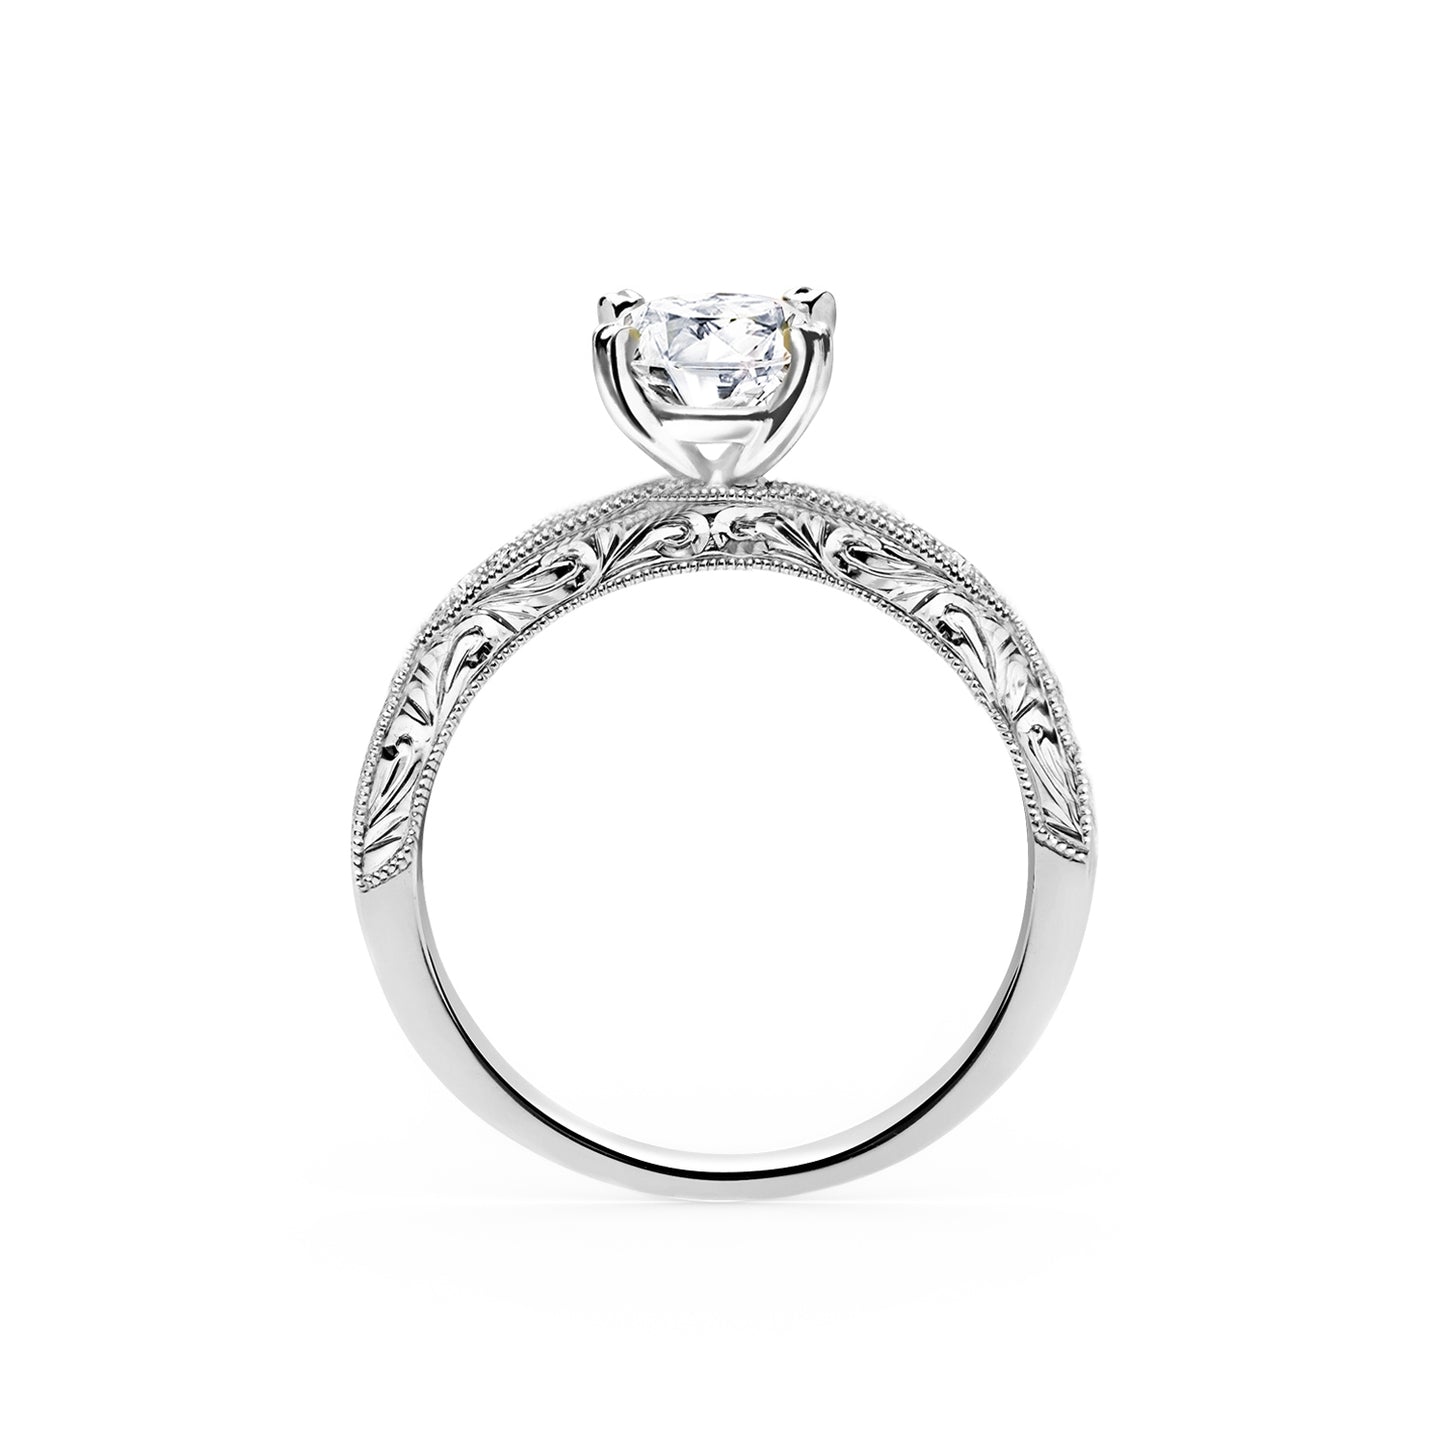 Channel Set Artful Ruby Diamond Engagement Ring